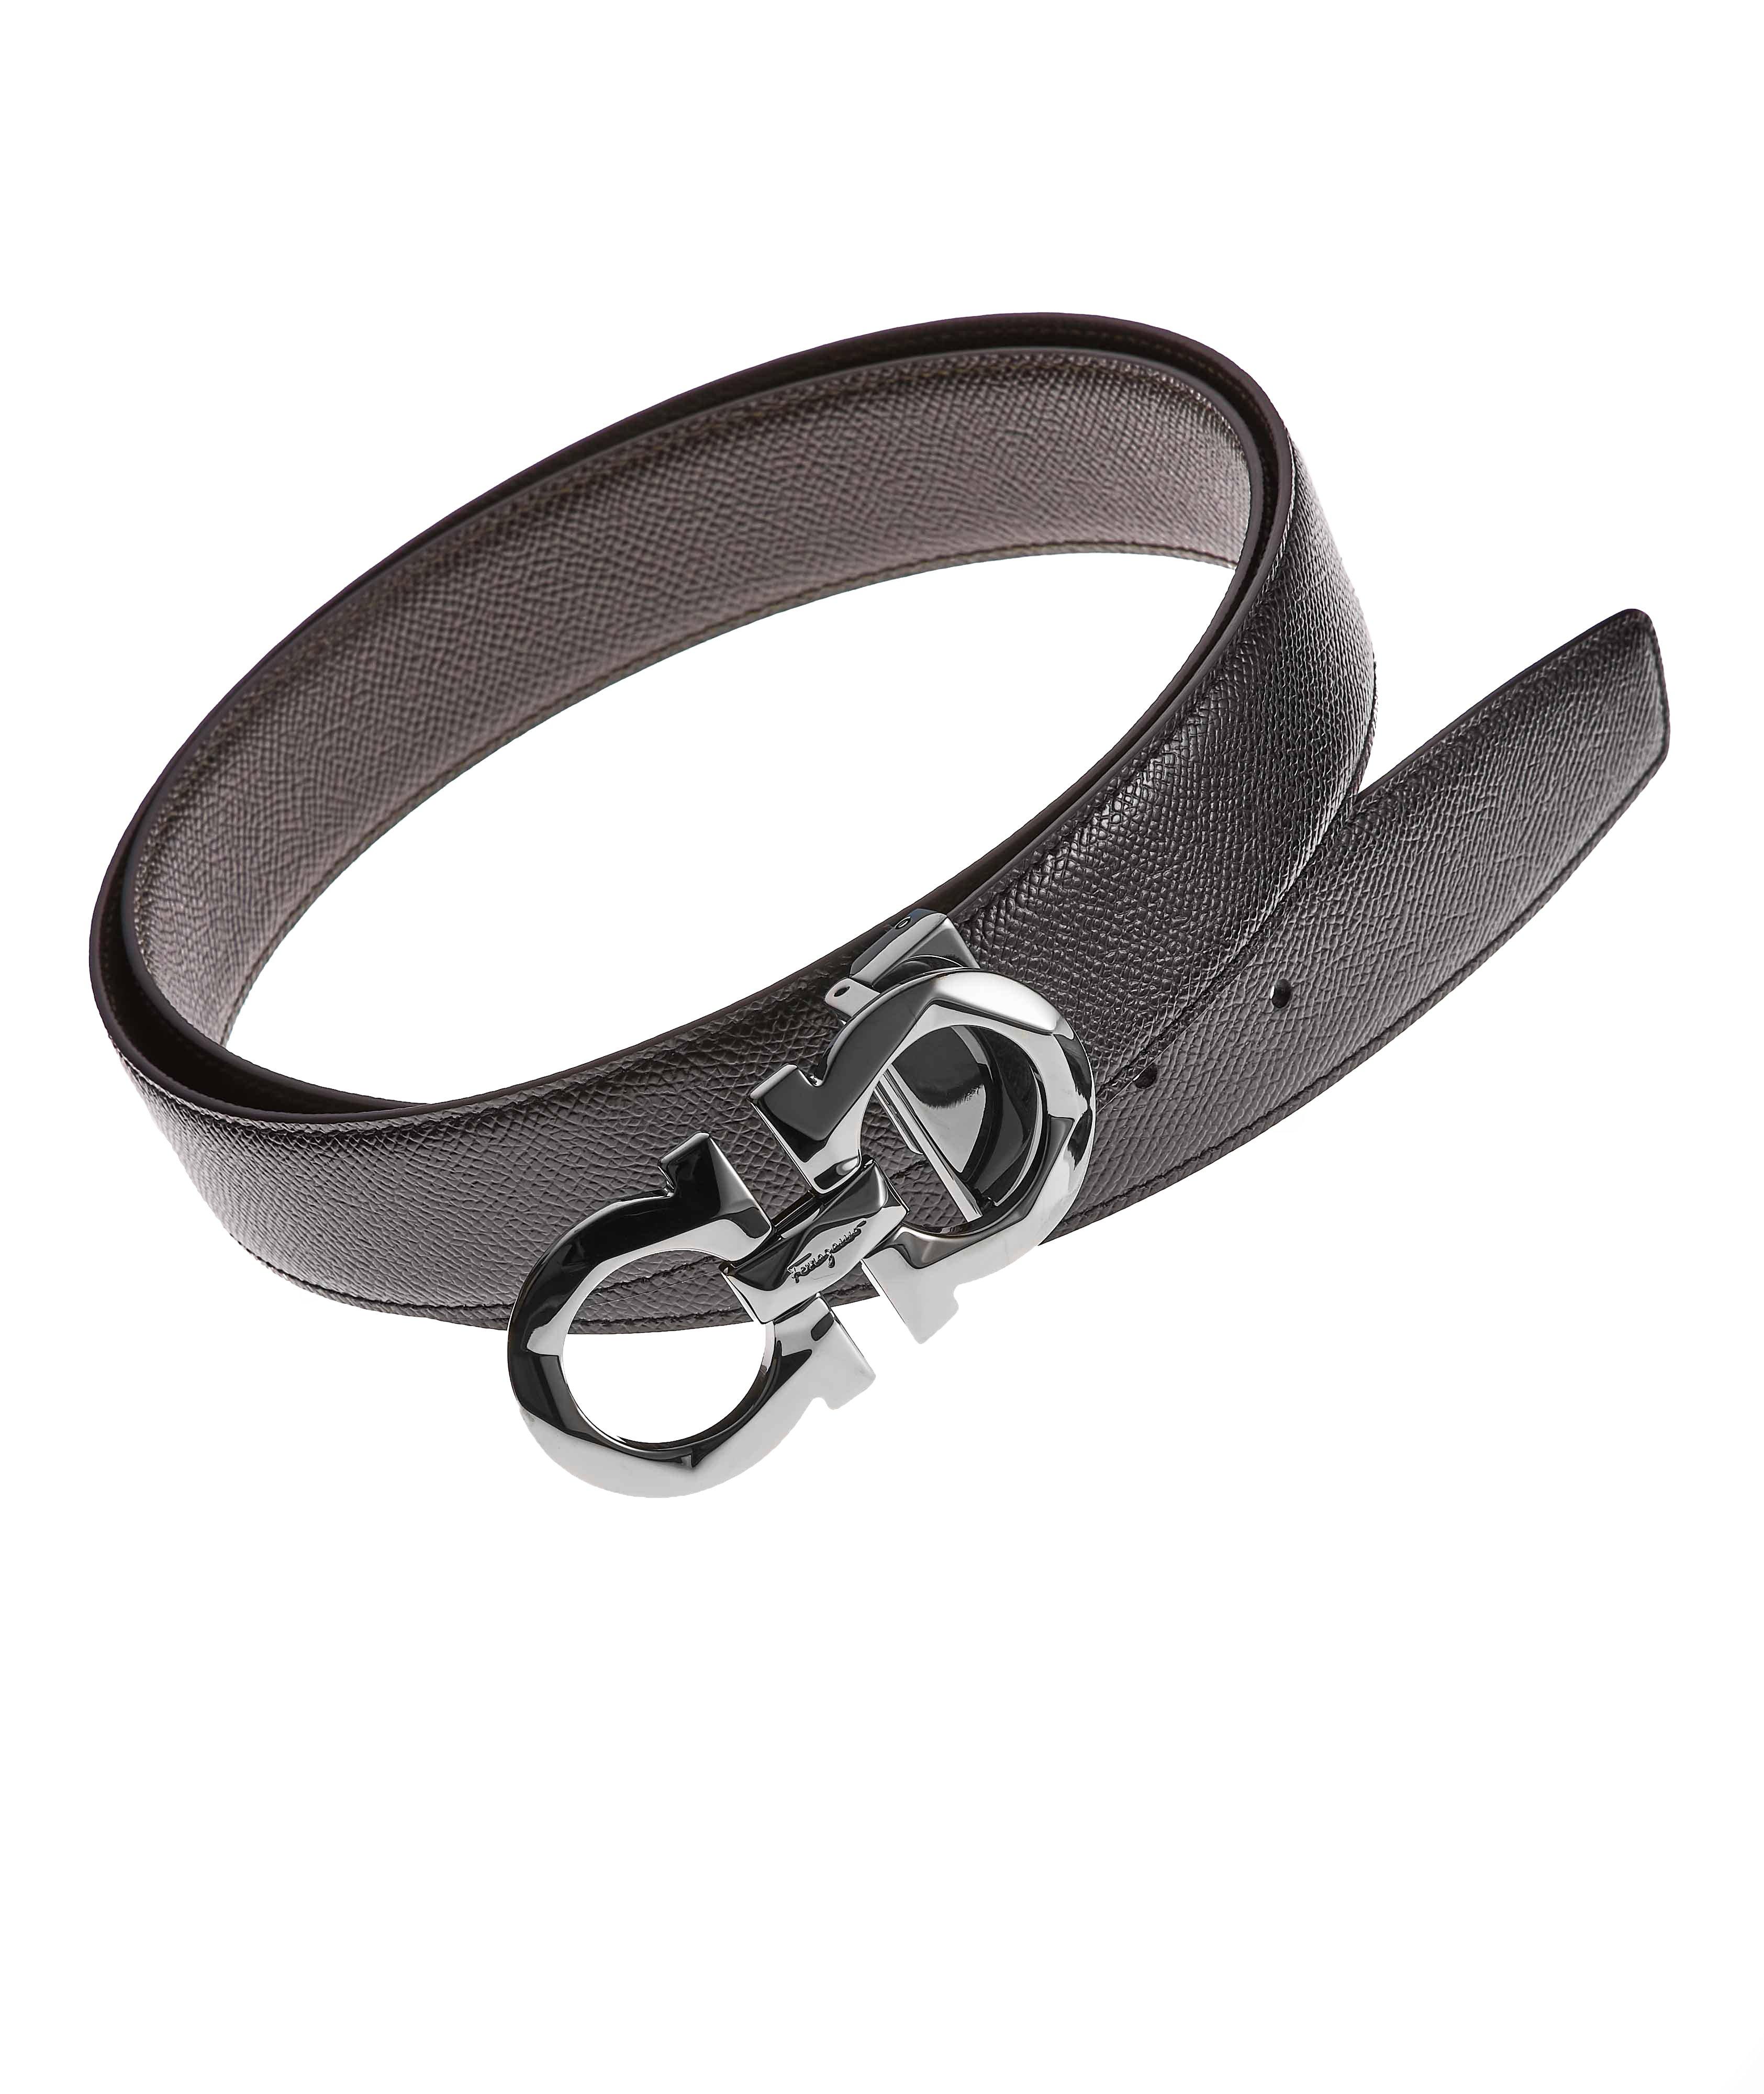 Reversible Double Gancini Leather Belt image 0